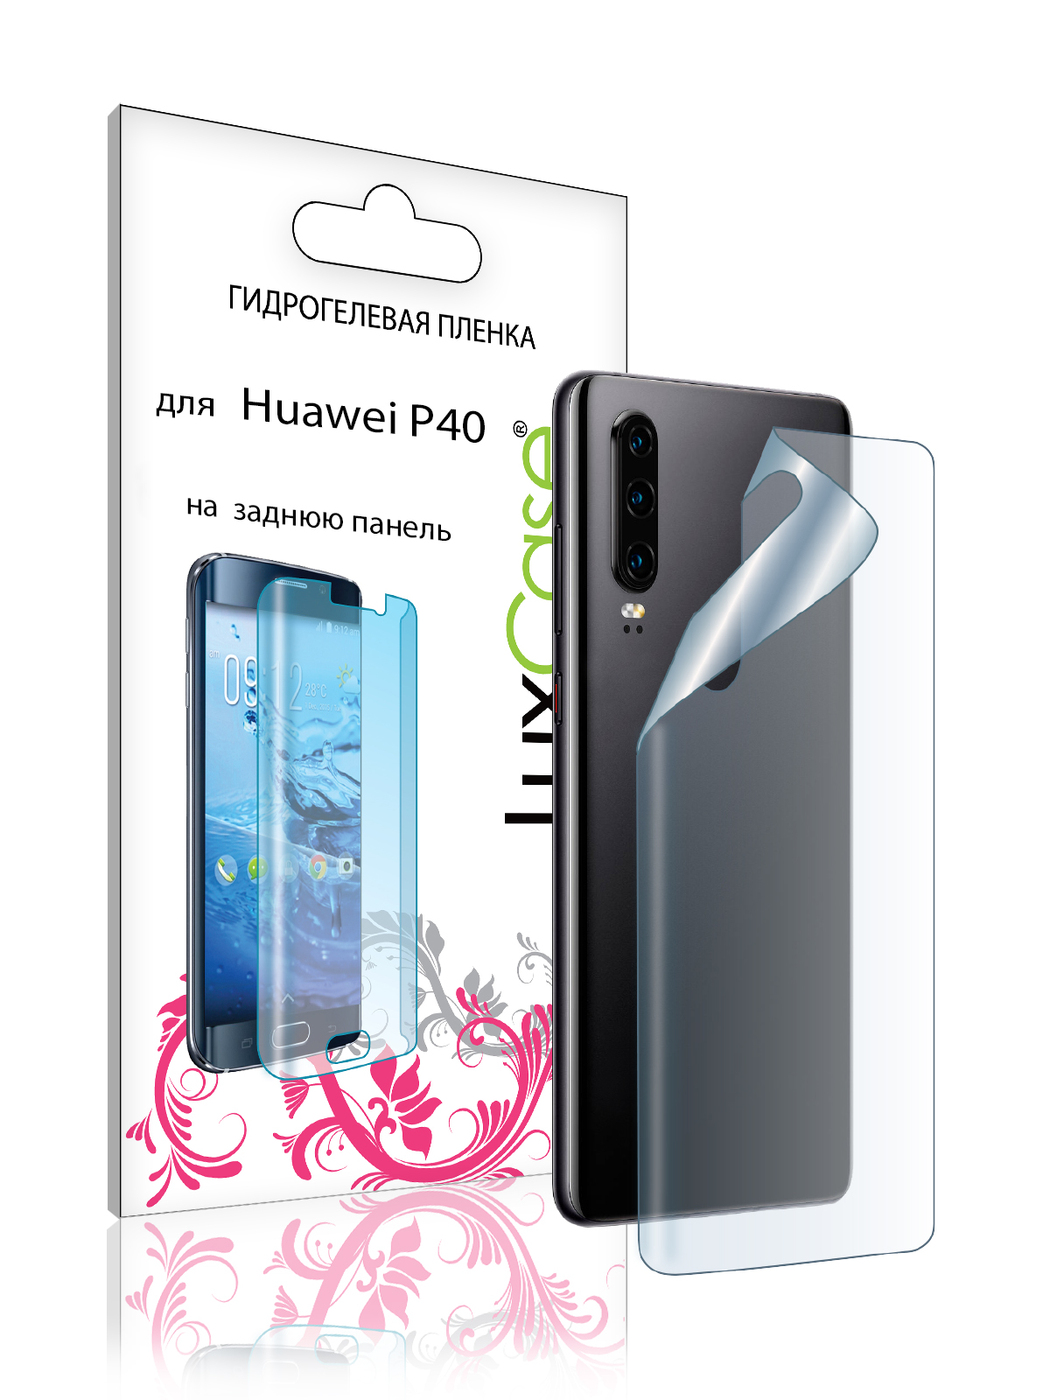 Защита задней крышки LuxCase для Huawei P40 пленка 0.14mm Transparent 86029 защитная пленка luxcase для huawei p40 pro back 0 14mm transparent 86125